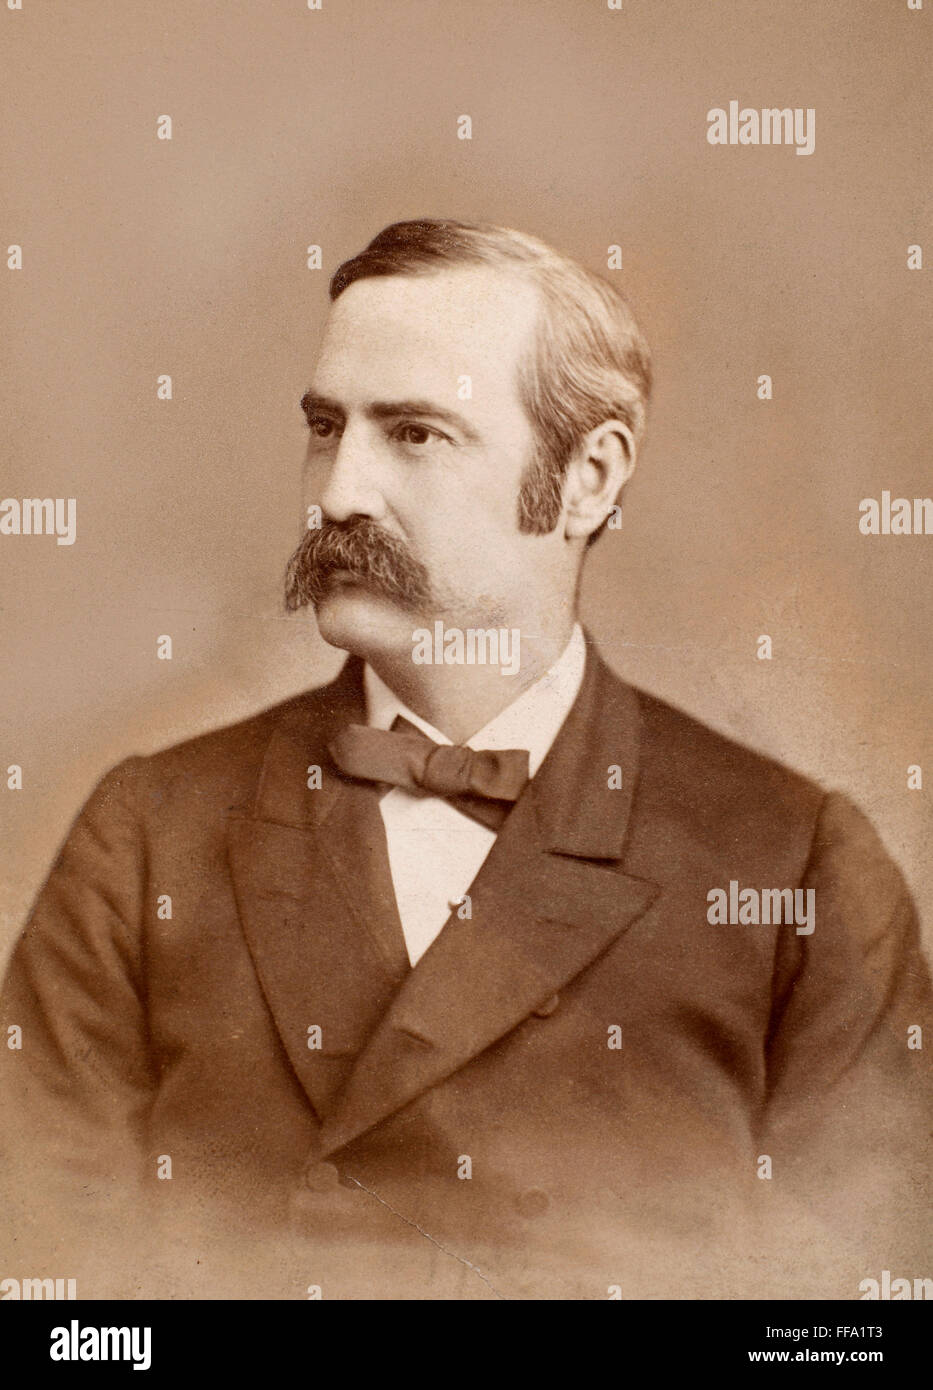 NELSON WILMARTH ALDRICH /n(1841-1915). American financier and legislator. Photographed c1885. Stock Photo